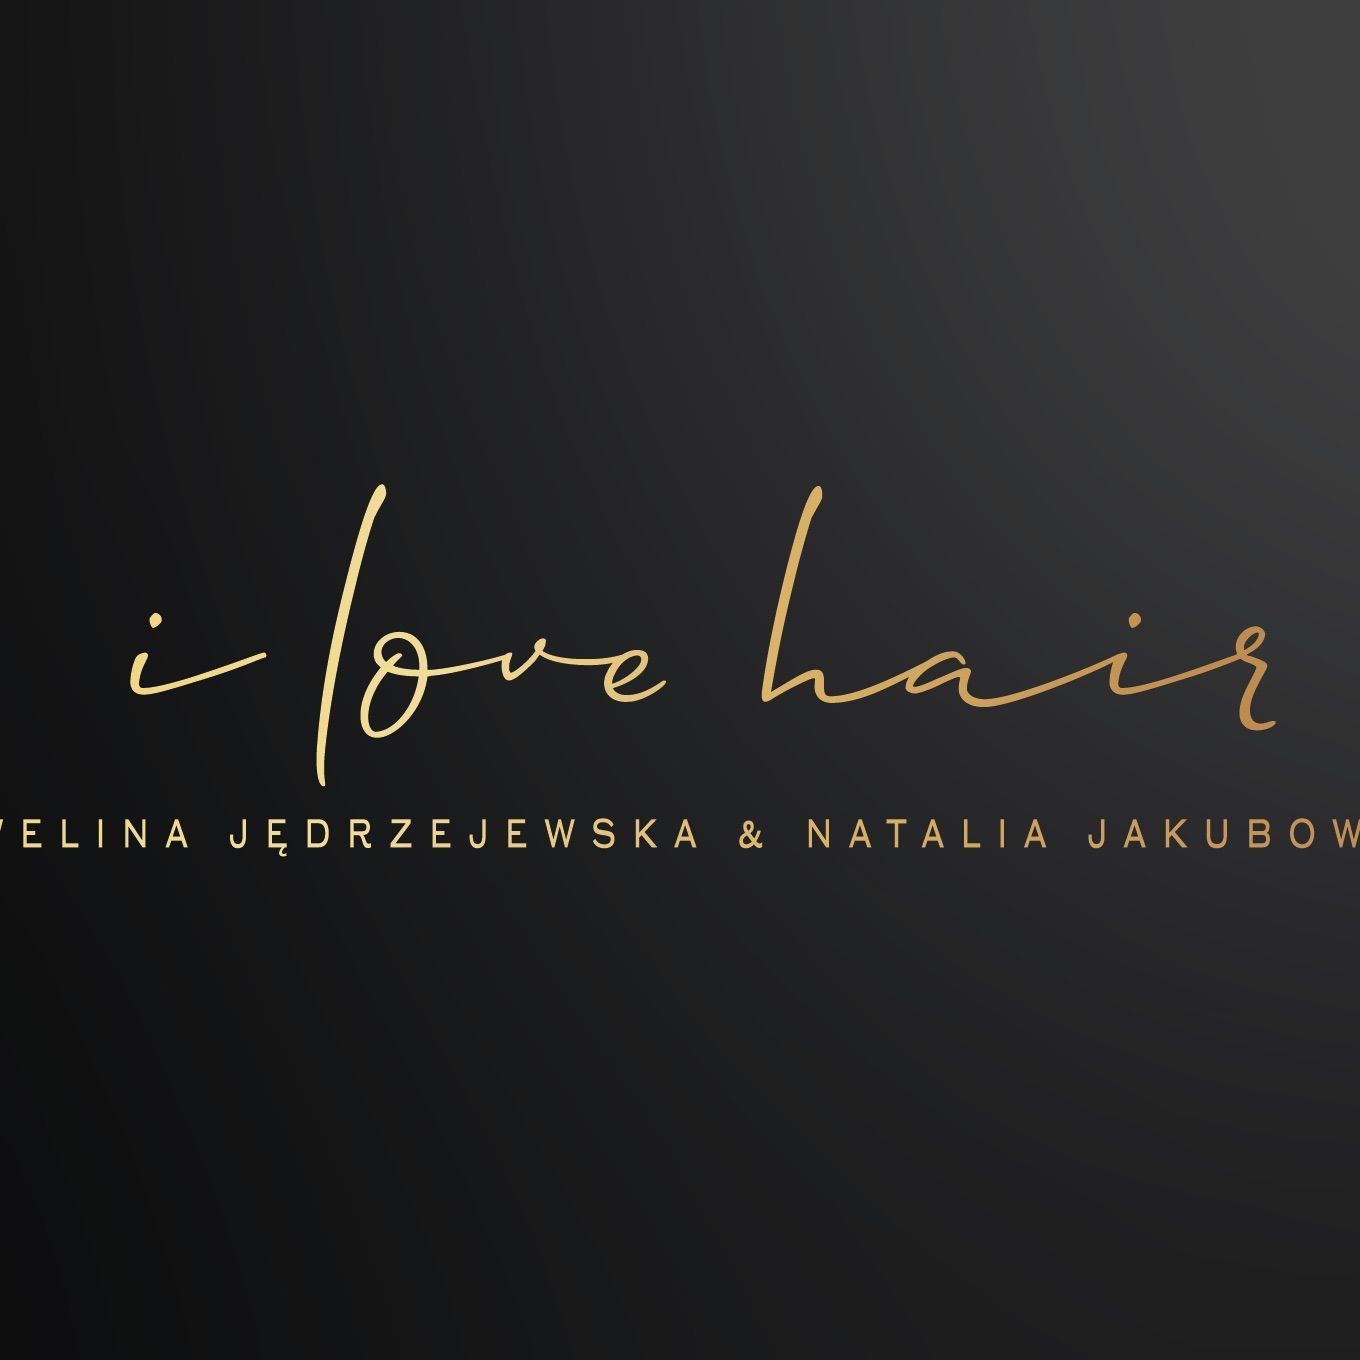 I LOVE HAIR, Lotników, 15D, 87-100, Toruń